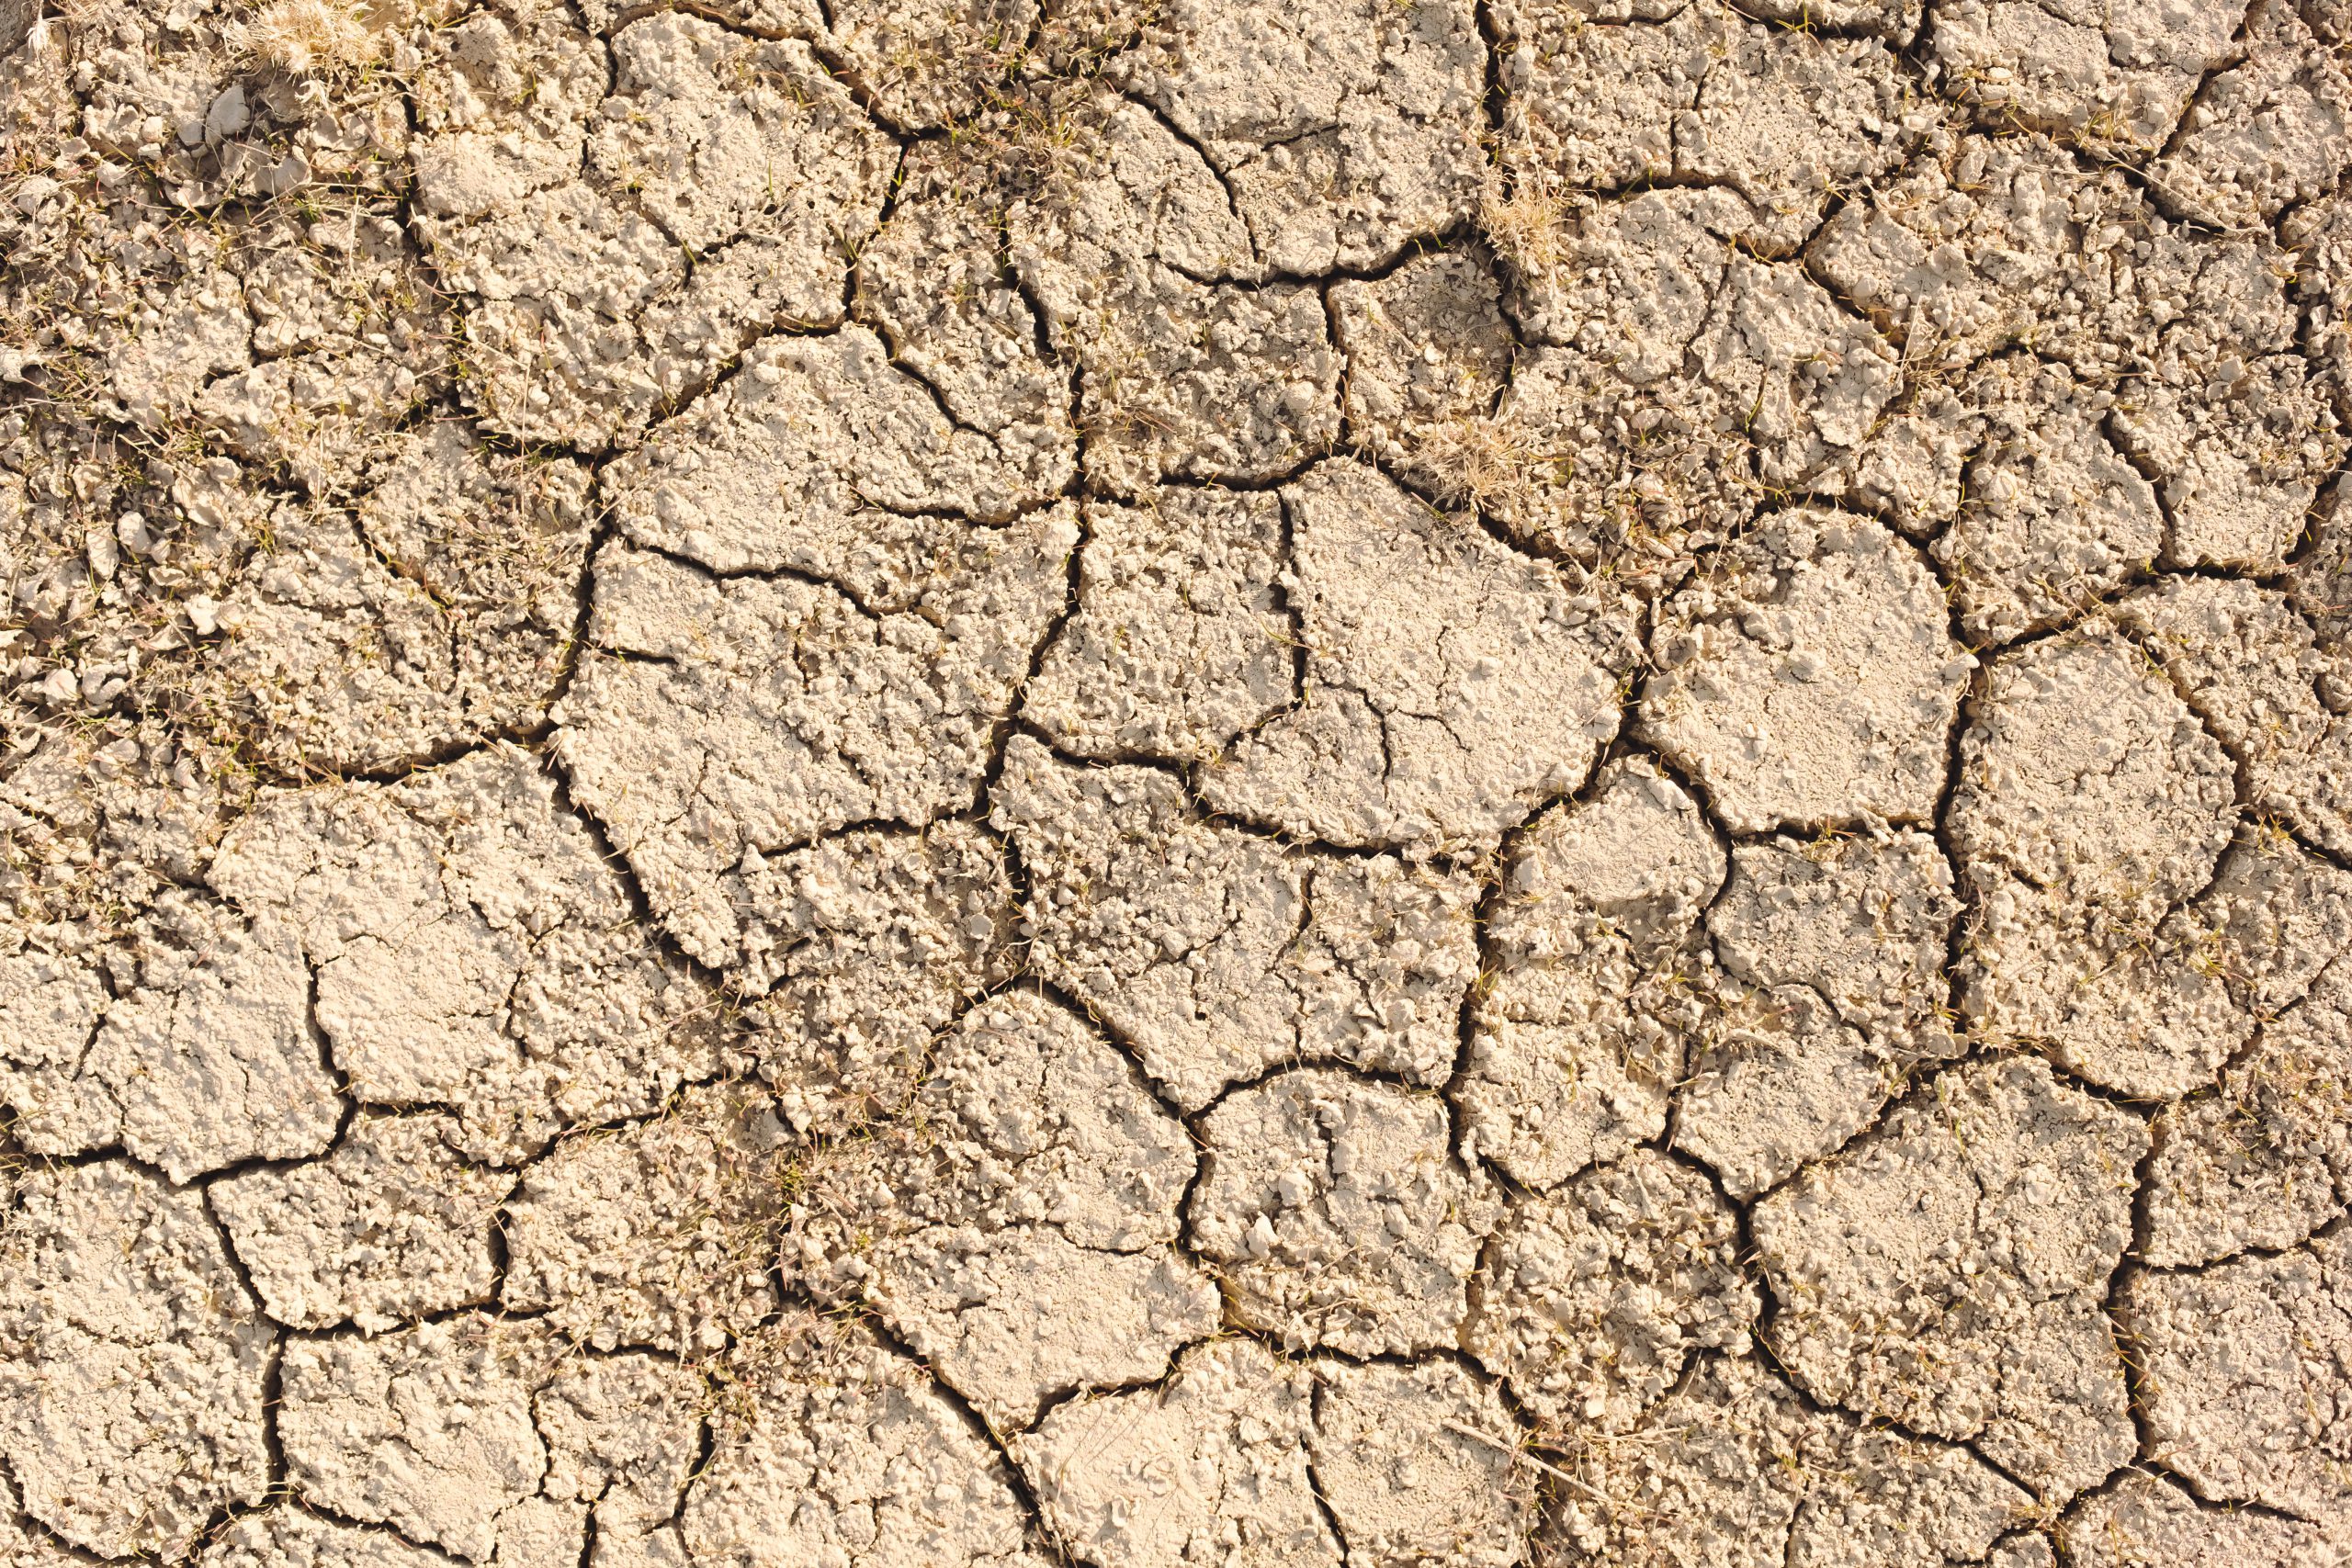 Dry cracked tan ground